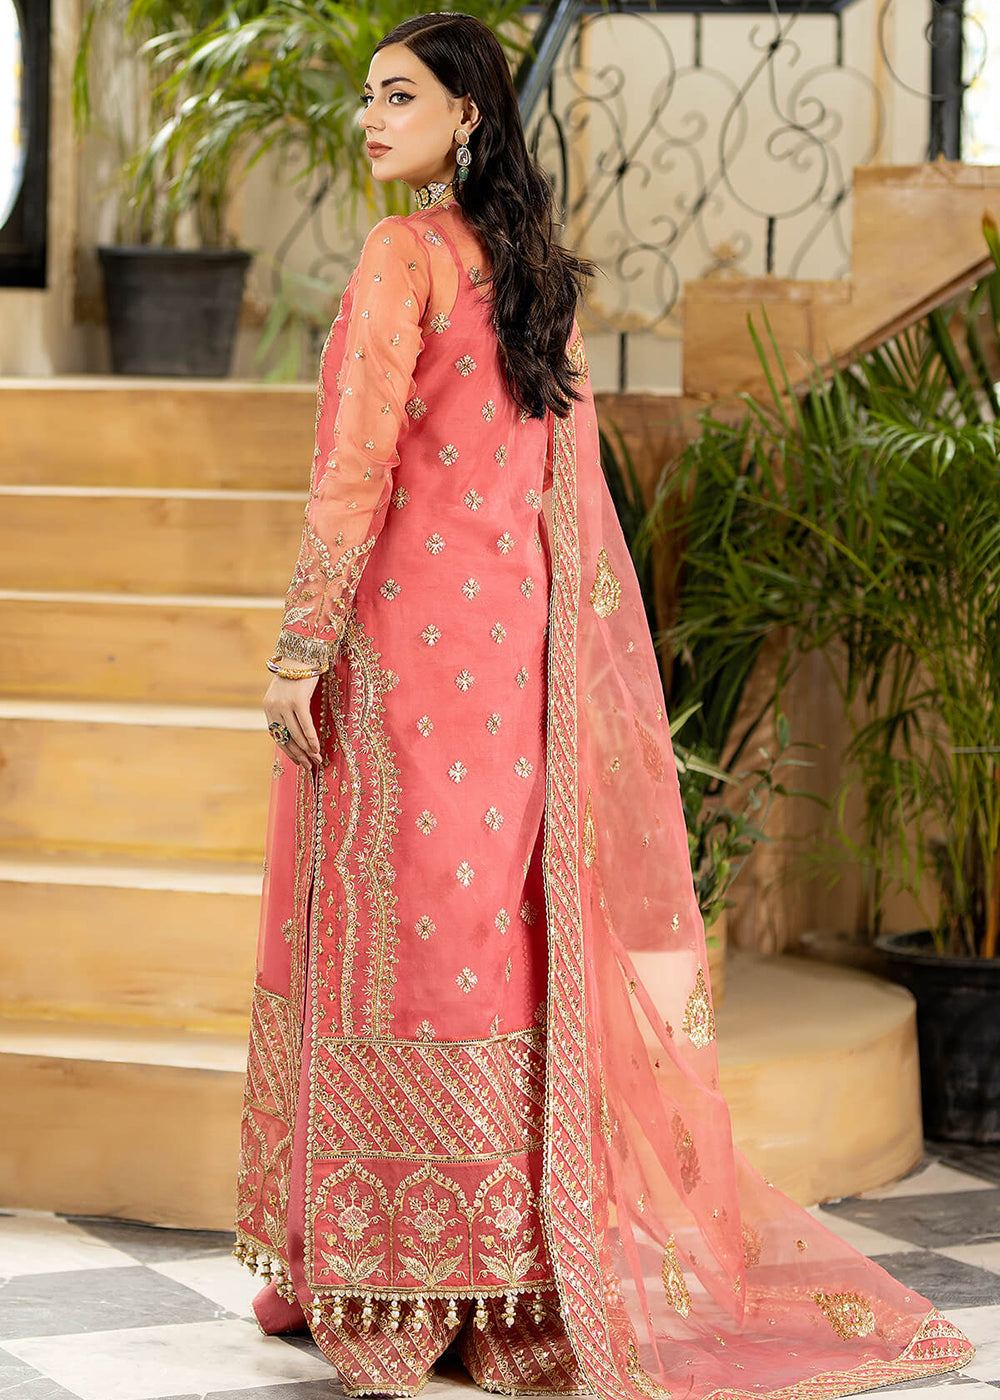 Buy Now Pink Wedding Formal Suit | Imrozia Premium | Jhalak '23 | I-187 - ULFAT Online in USA, UK, Canada & Worldwide at Empress Clothing.